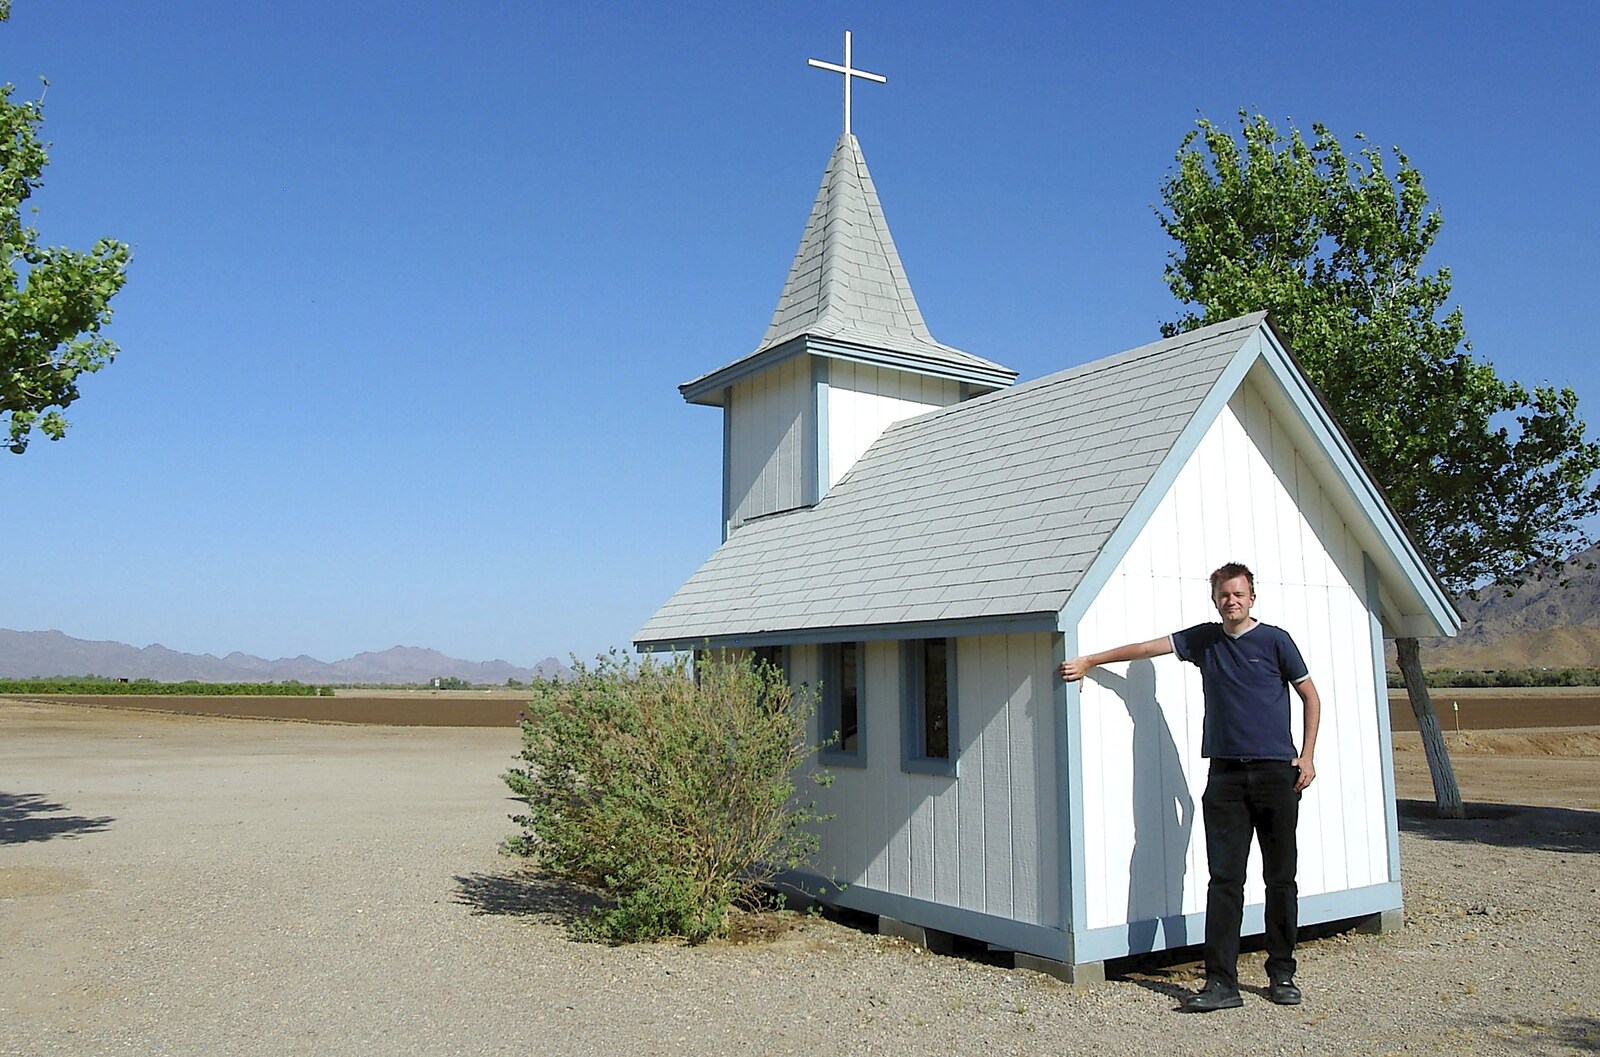 A tiny church near Blaisdell, Arizona from San Diego Seven: The Desert and the Dunes, Arizona and California, US - 22nd April